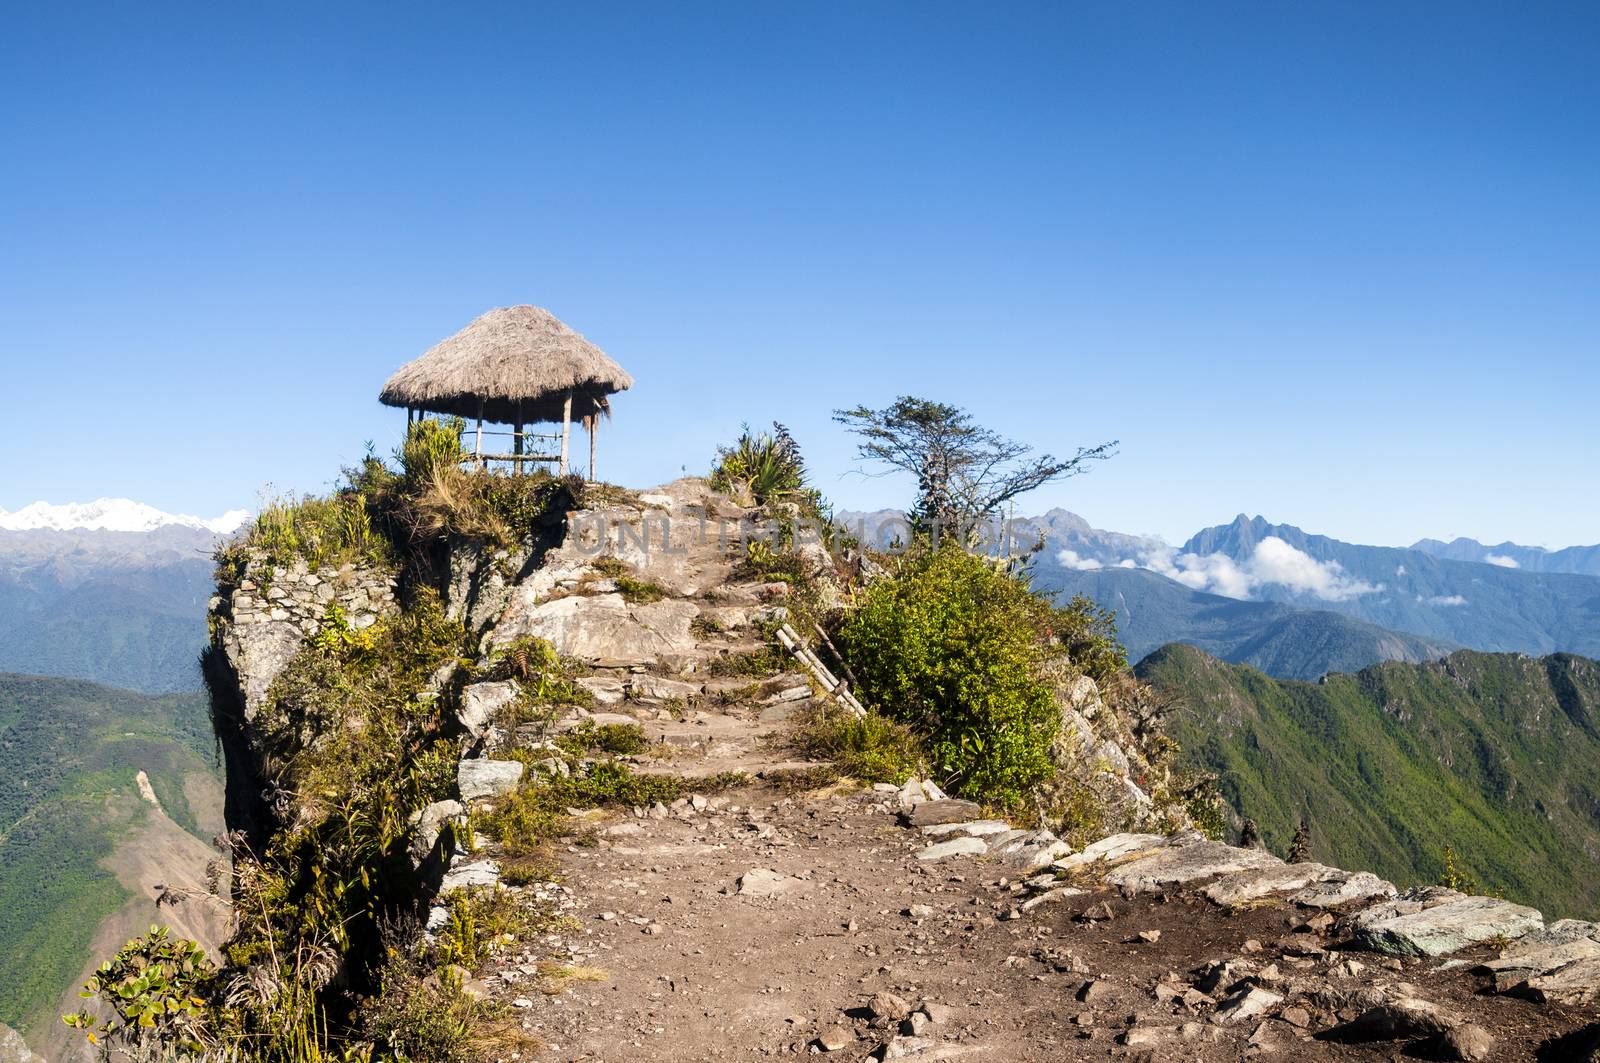 Pavillion atop Peak of Machu Picchu Mountain after a long hike